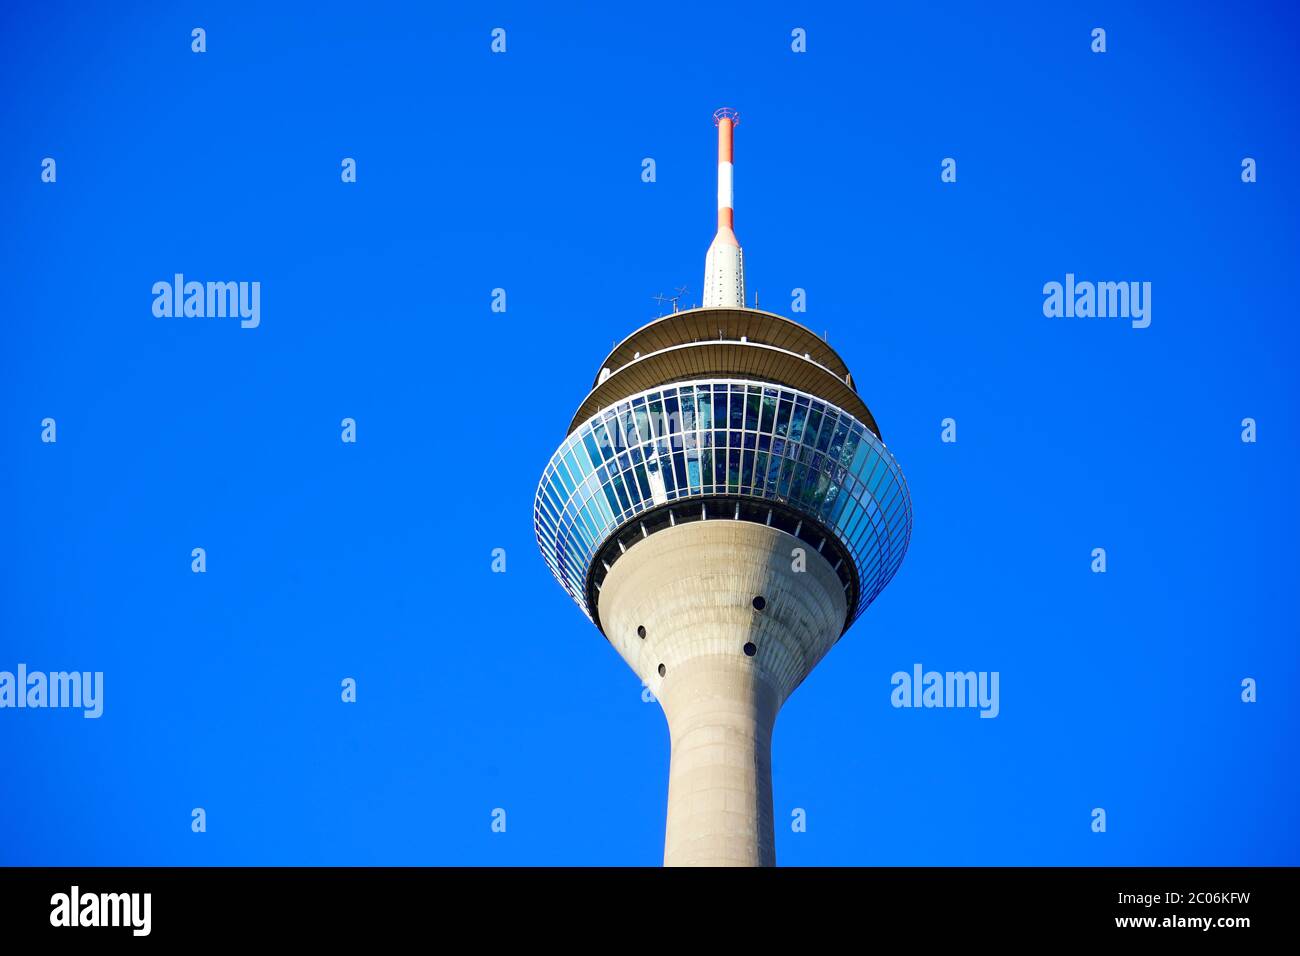 Worm's eye view of Rhine Tower (German: Rheinturm), Düsseldorf's landmark, with blue sky background. The Rhine Tower is 240.5 metres high. Stock Photo